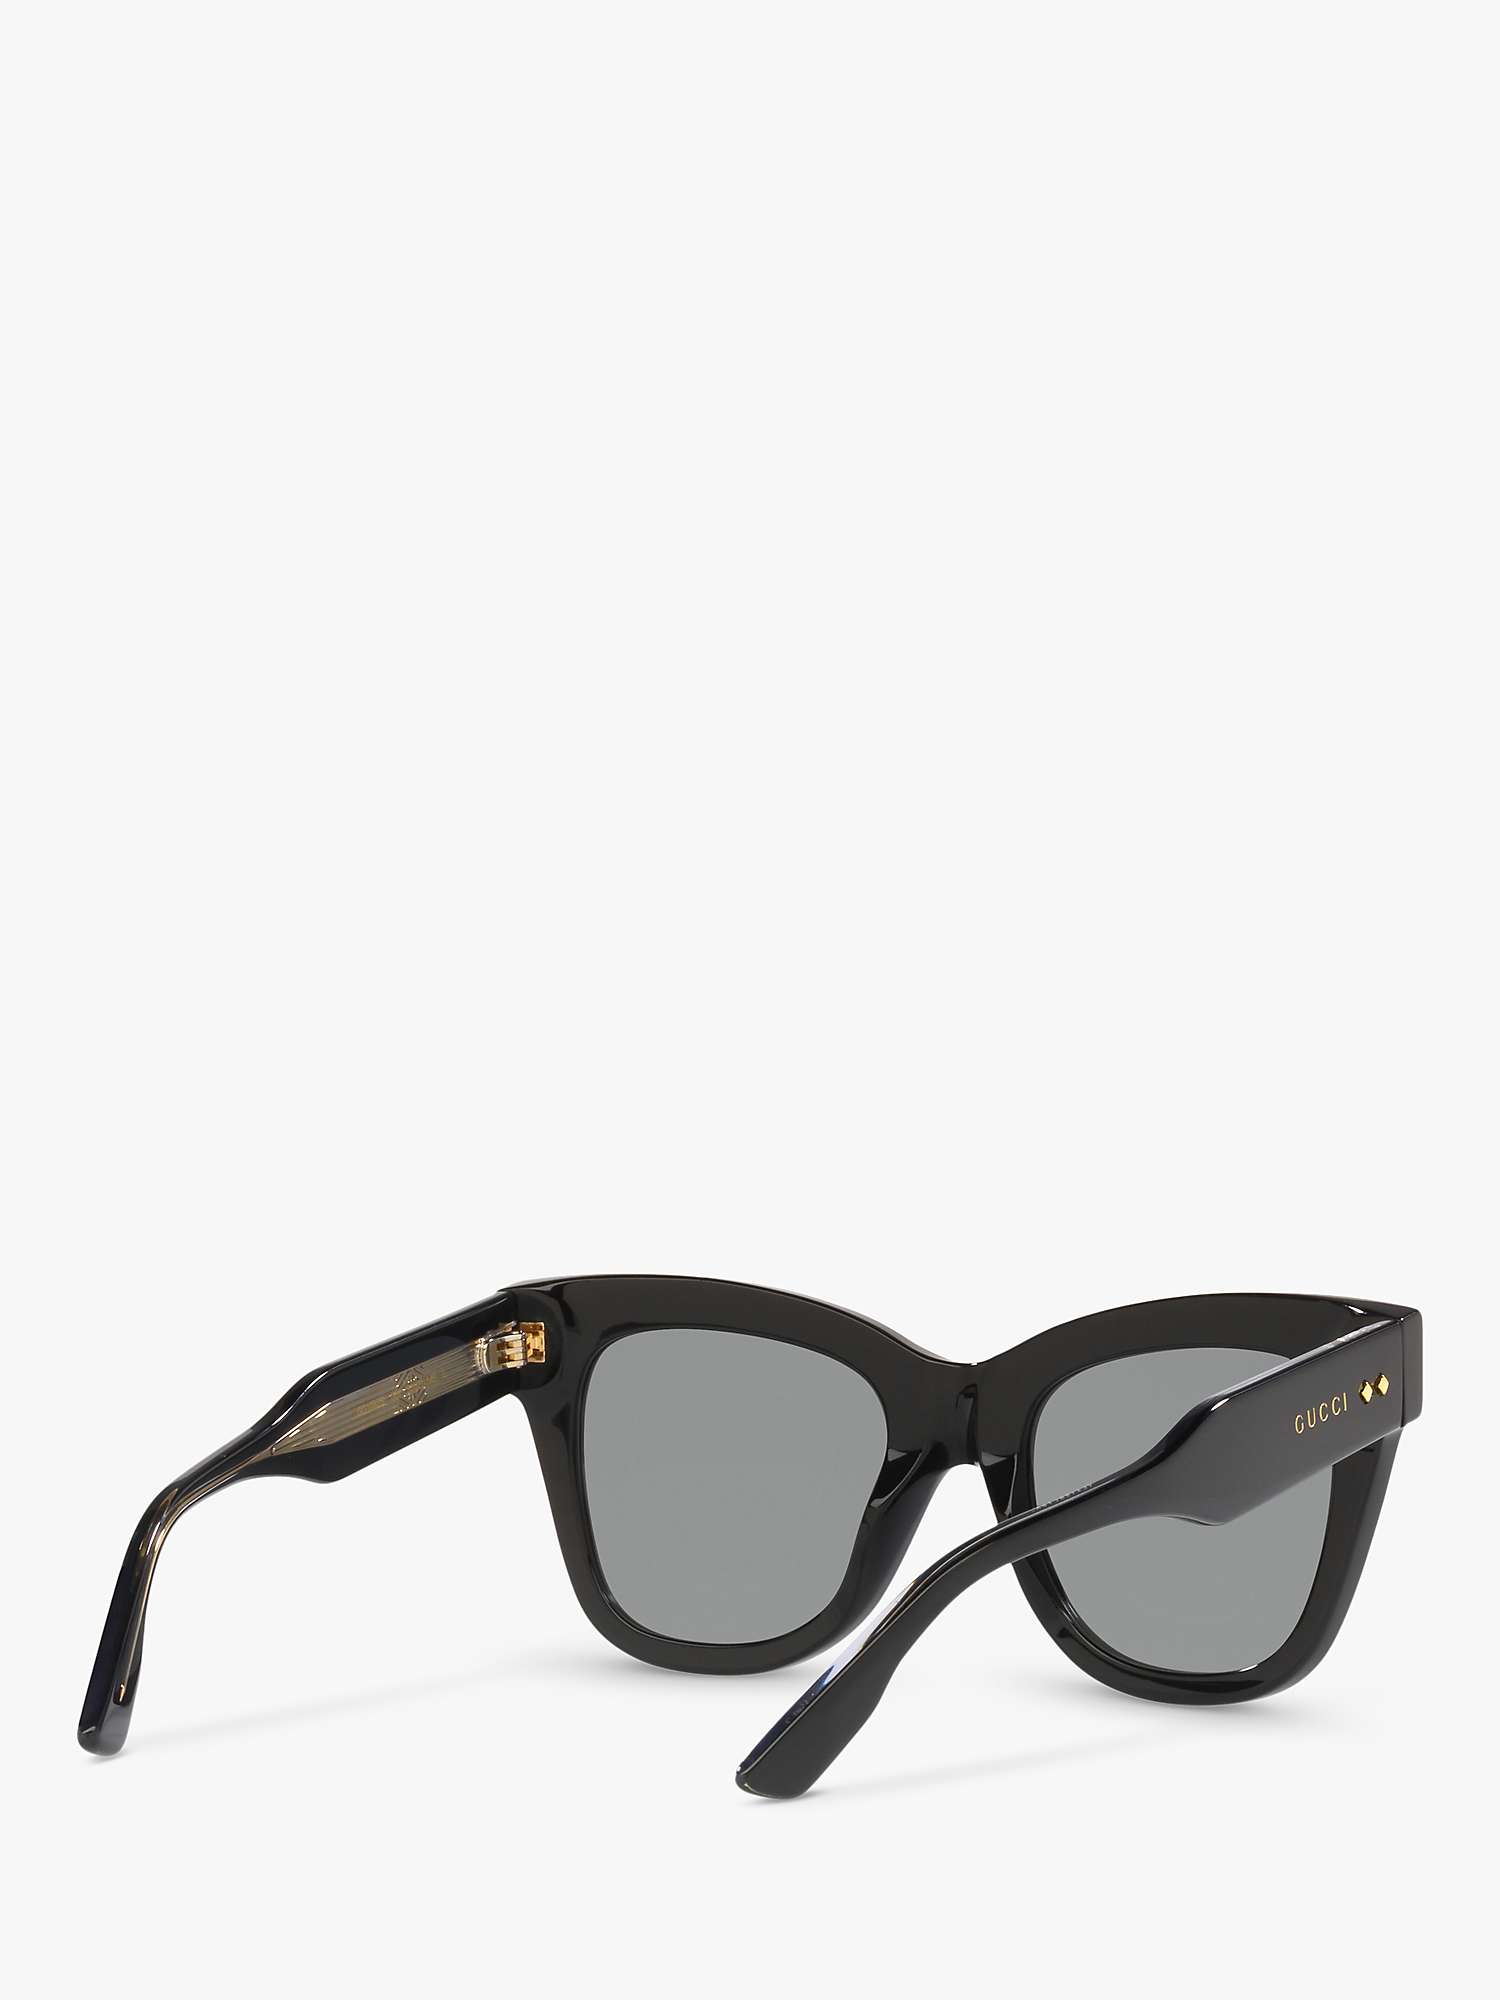 Buy Gucci GG1082S Women's Cat's Eye Sunglasses Online at johnlewis.com